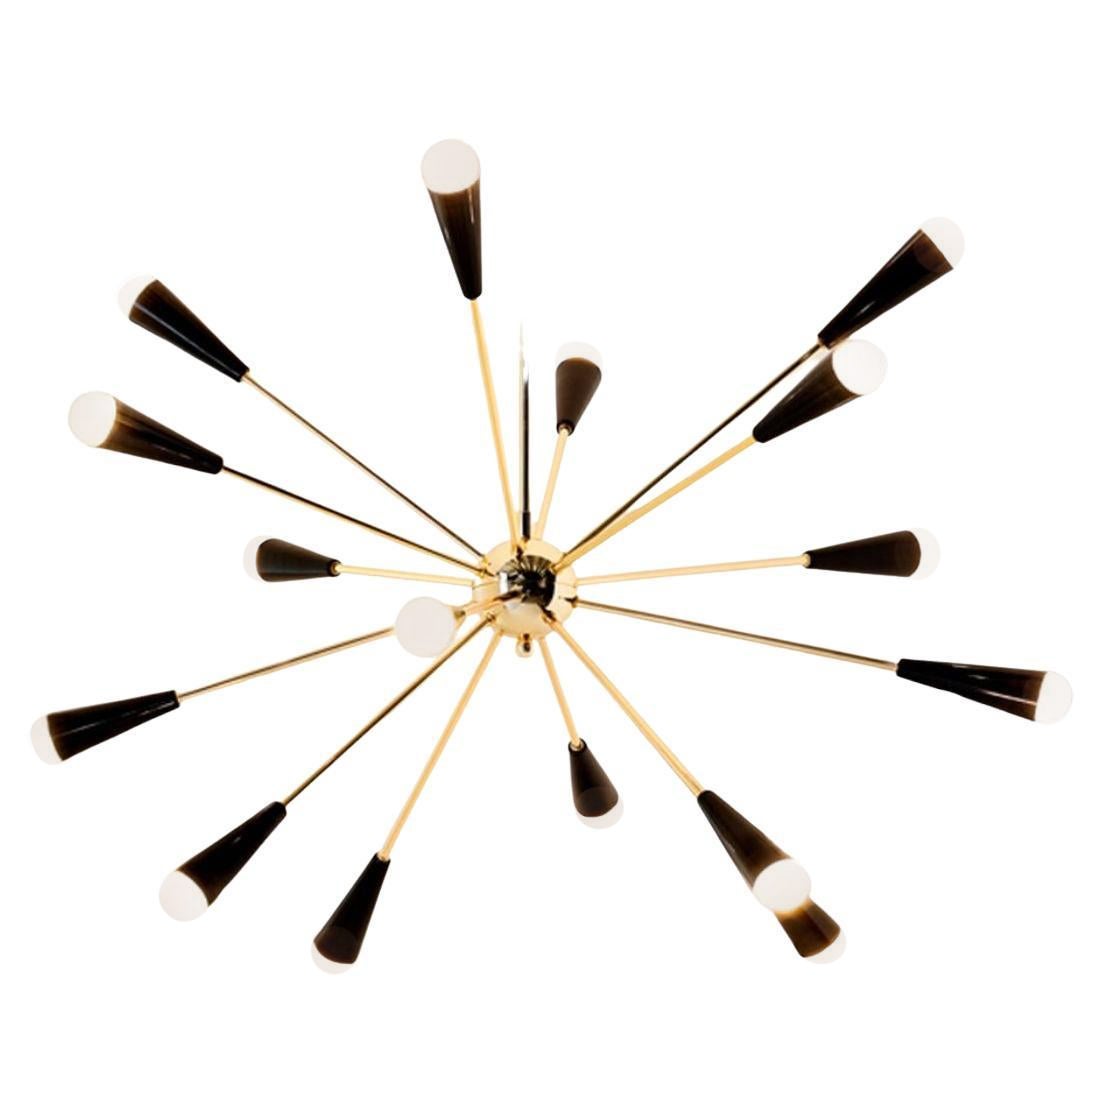 Achille & Pier Castiglioni 'Sputnik' Brass Chandelier in Black for Stilnovo For Sale